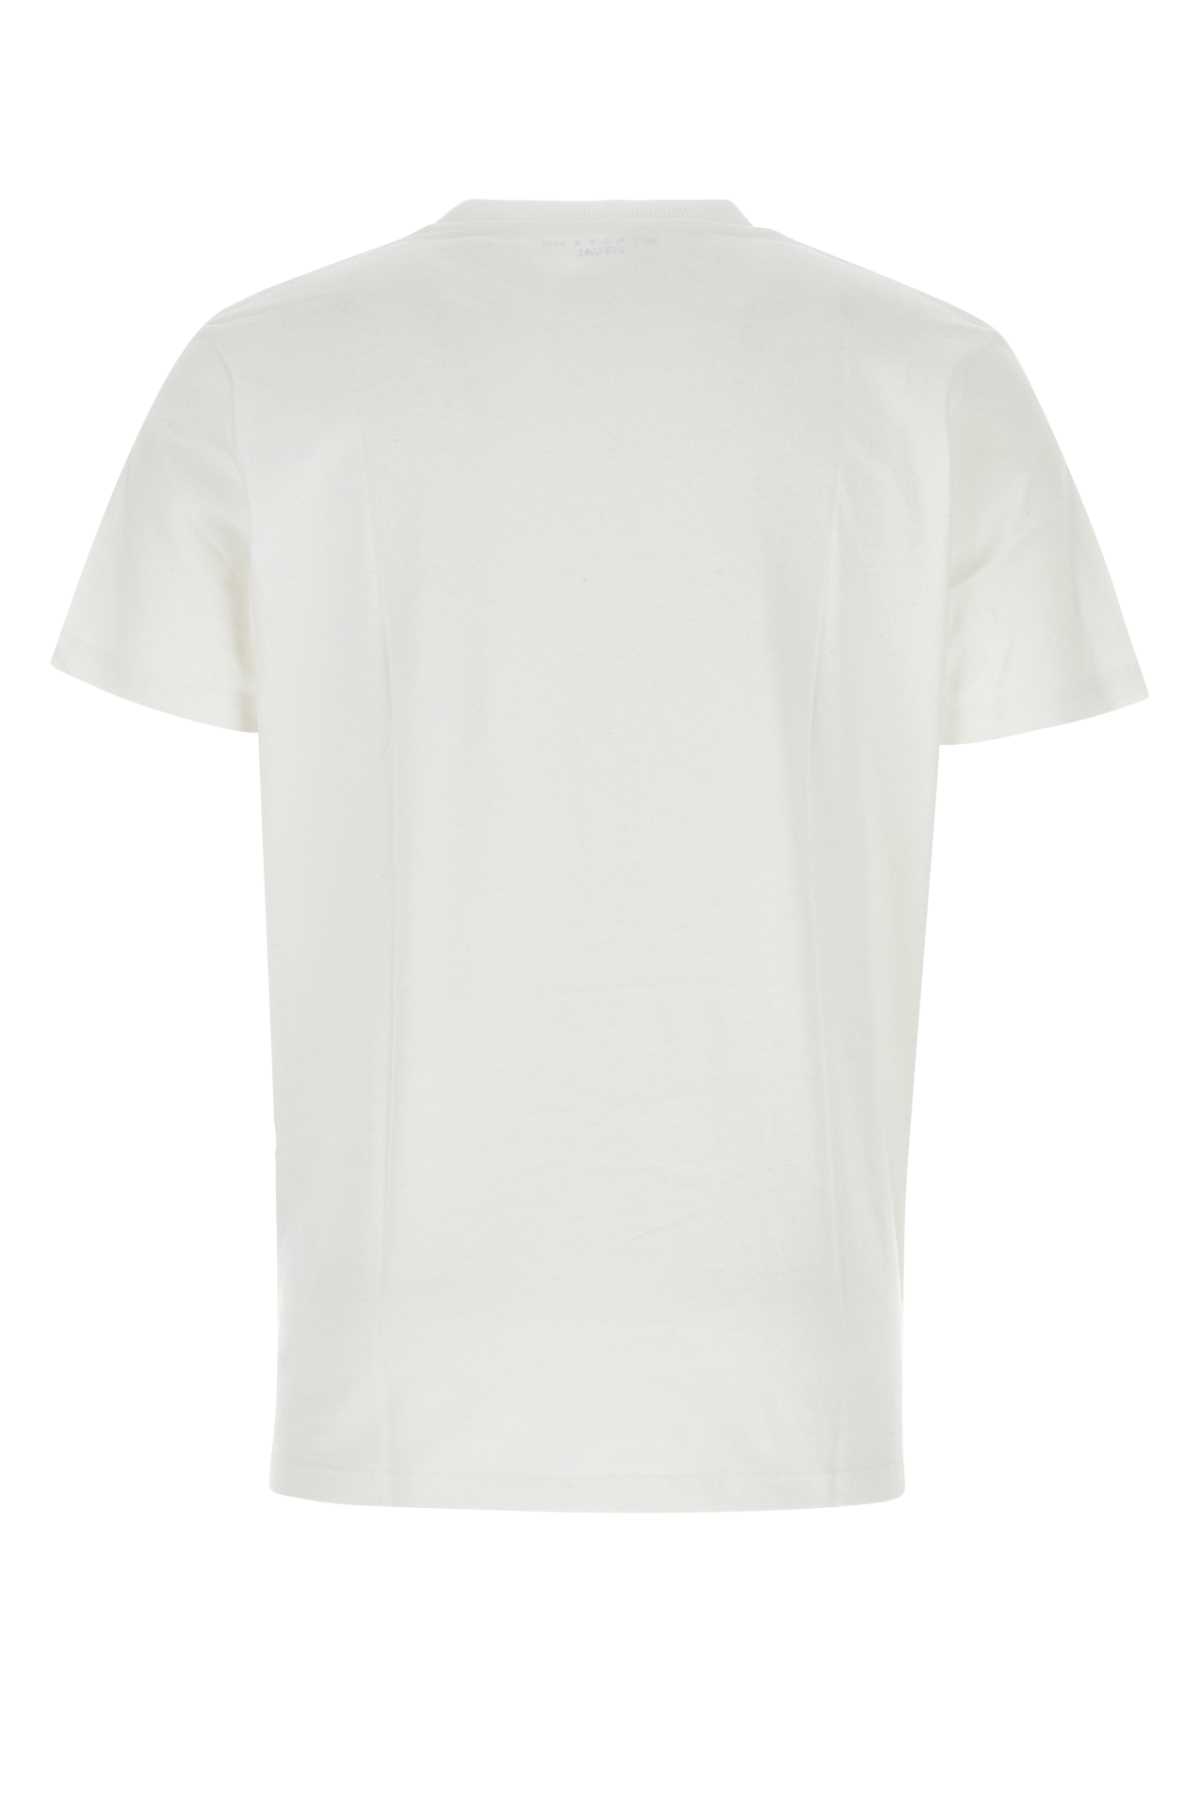 Alyx White Cotton T-shirt Set In Wth0001